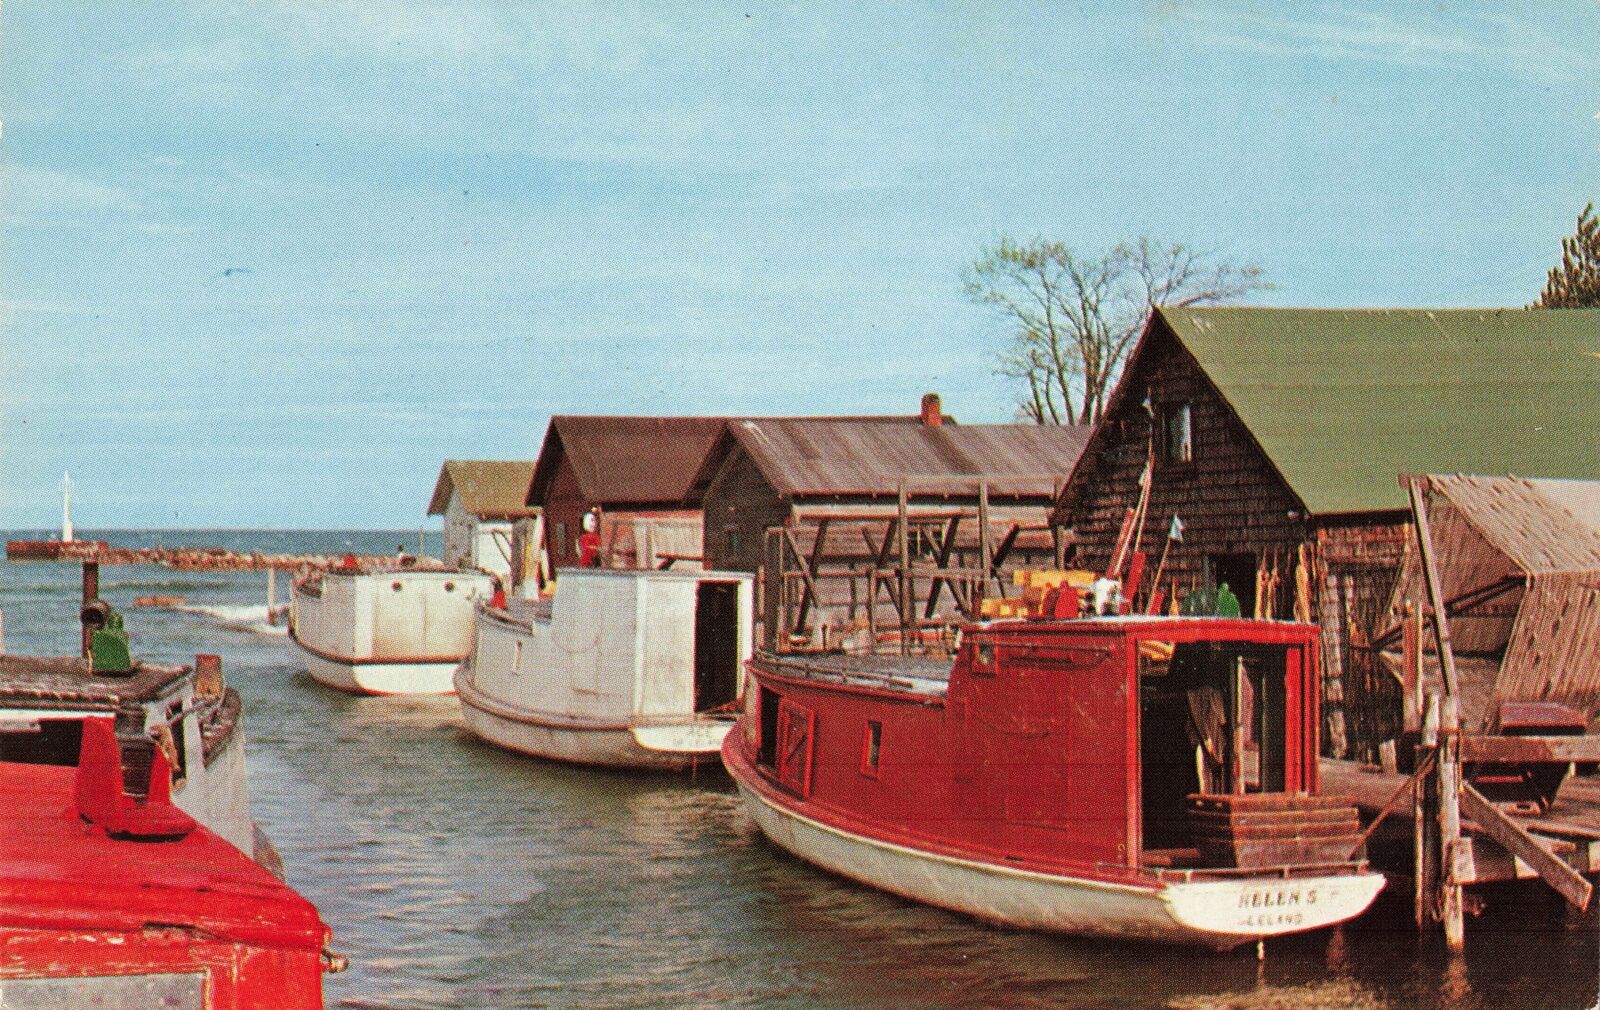 NW Leland Manitou MI 1950s Commercial Fishing HISTORIC FISHTOWN Tugs the HELEN S